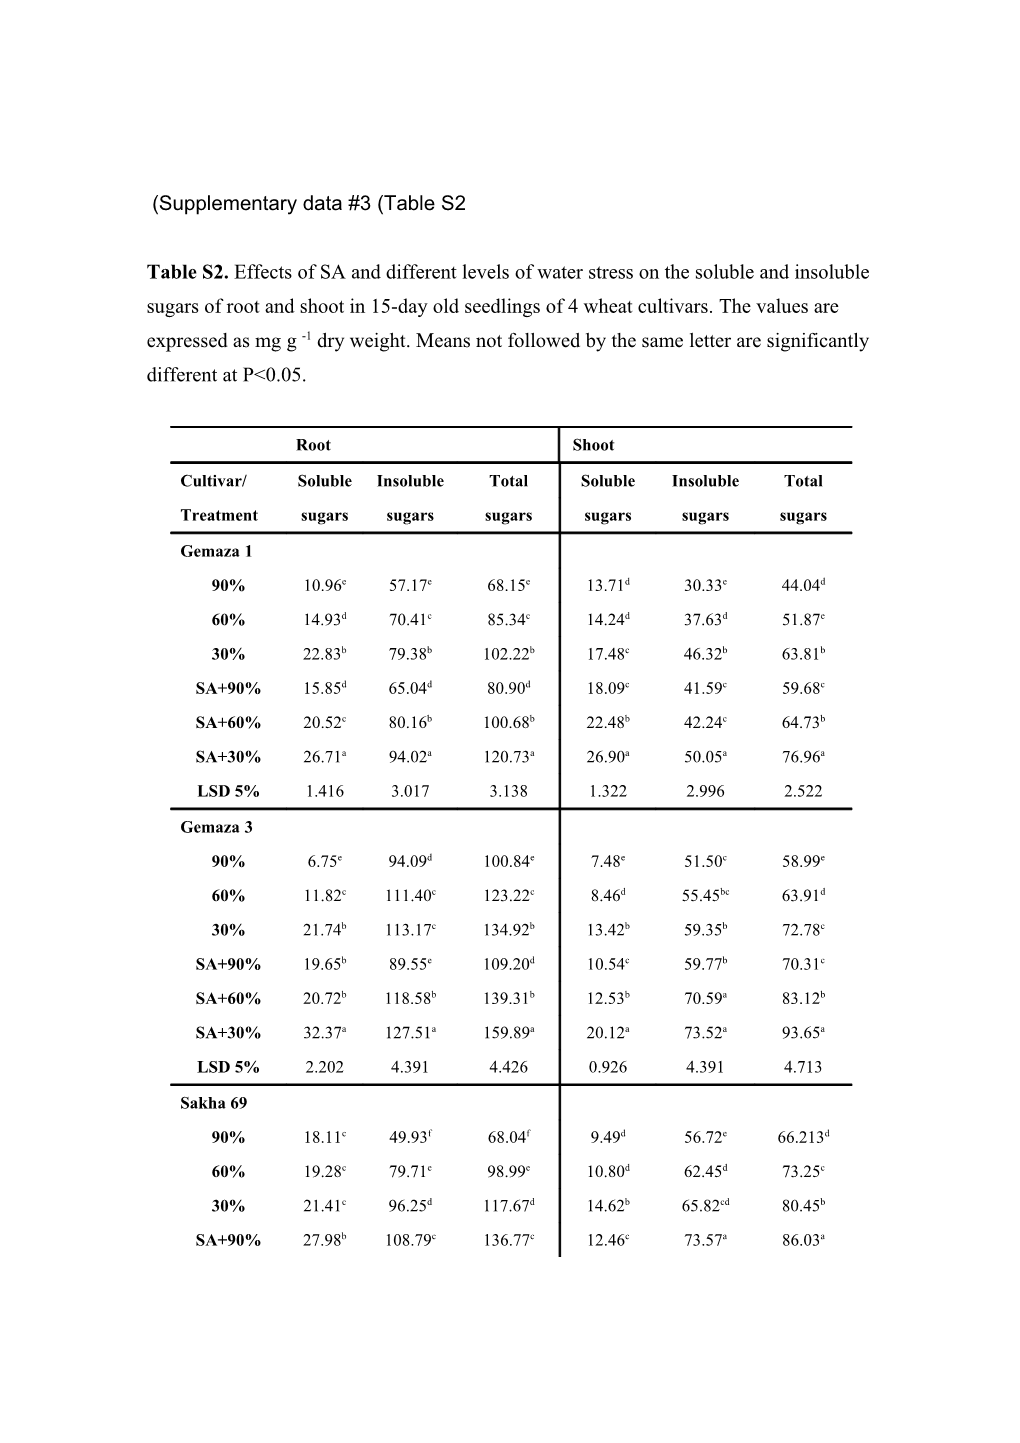 Supplementary Data #3 (Table S2)